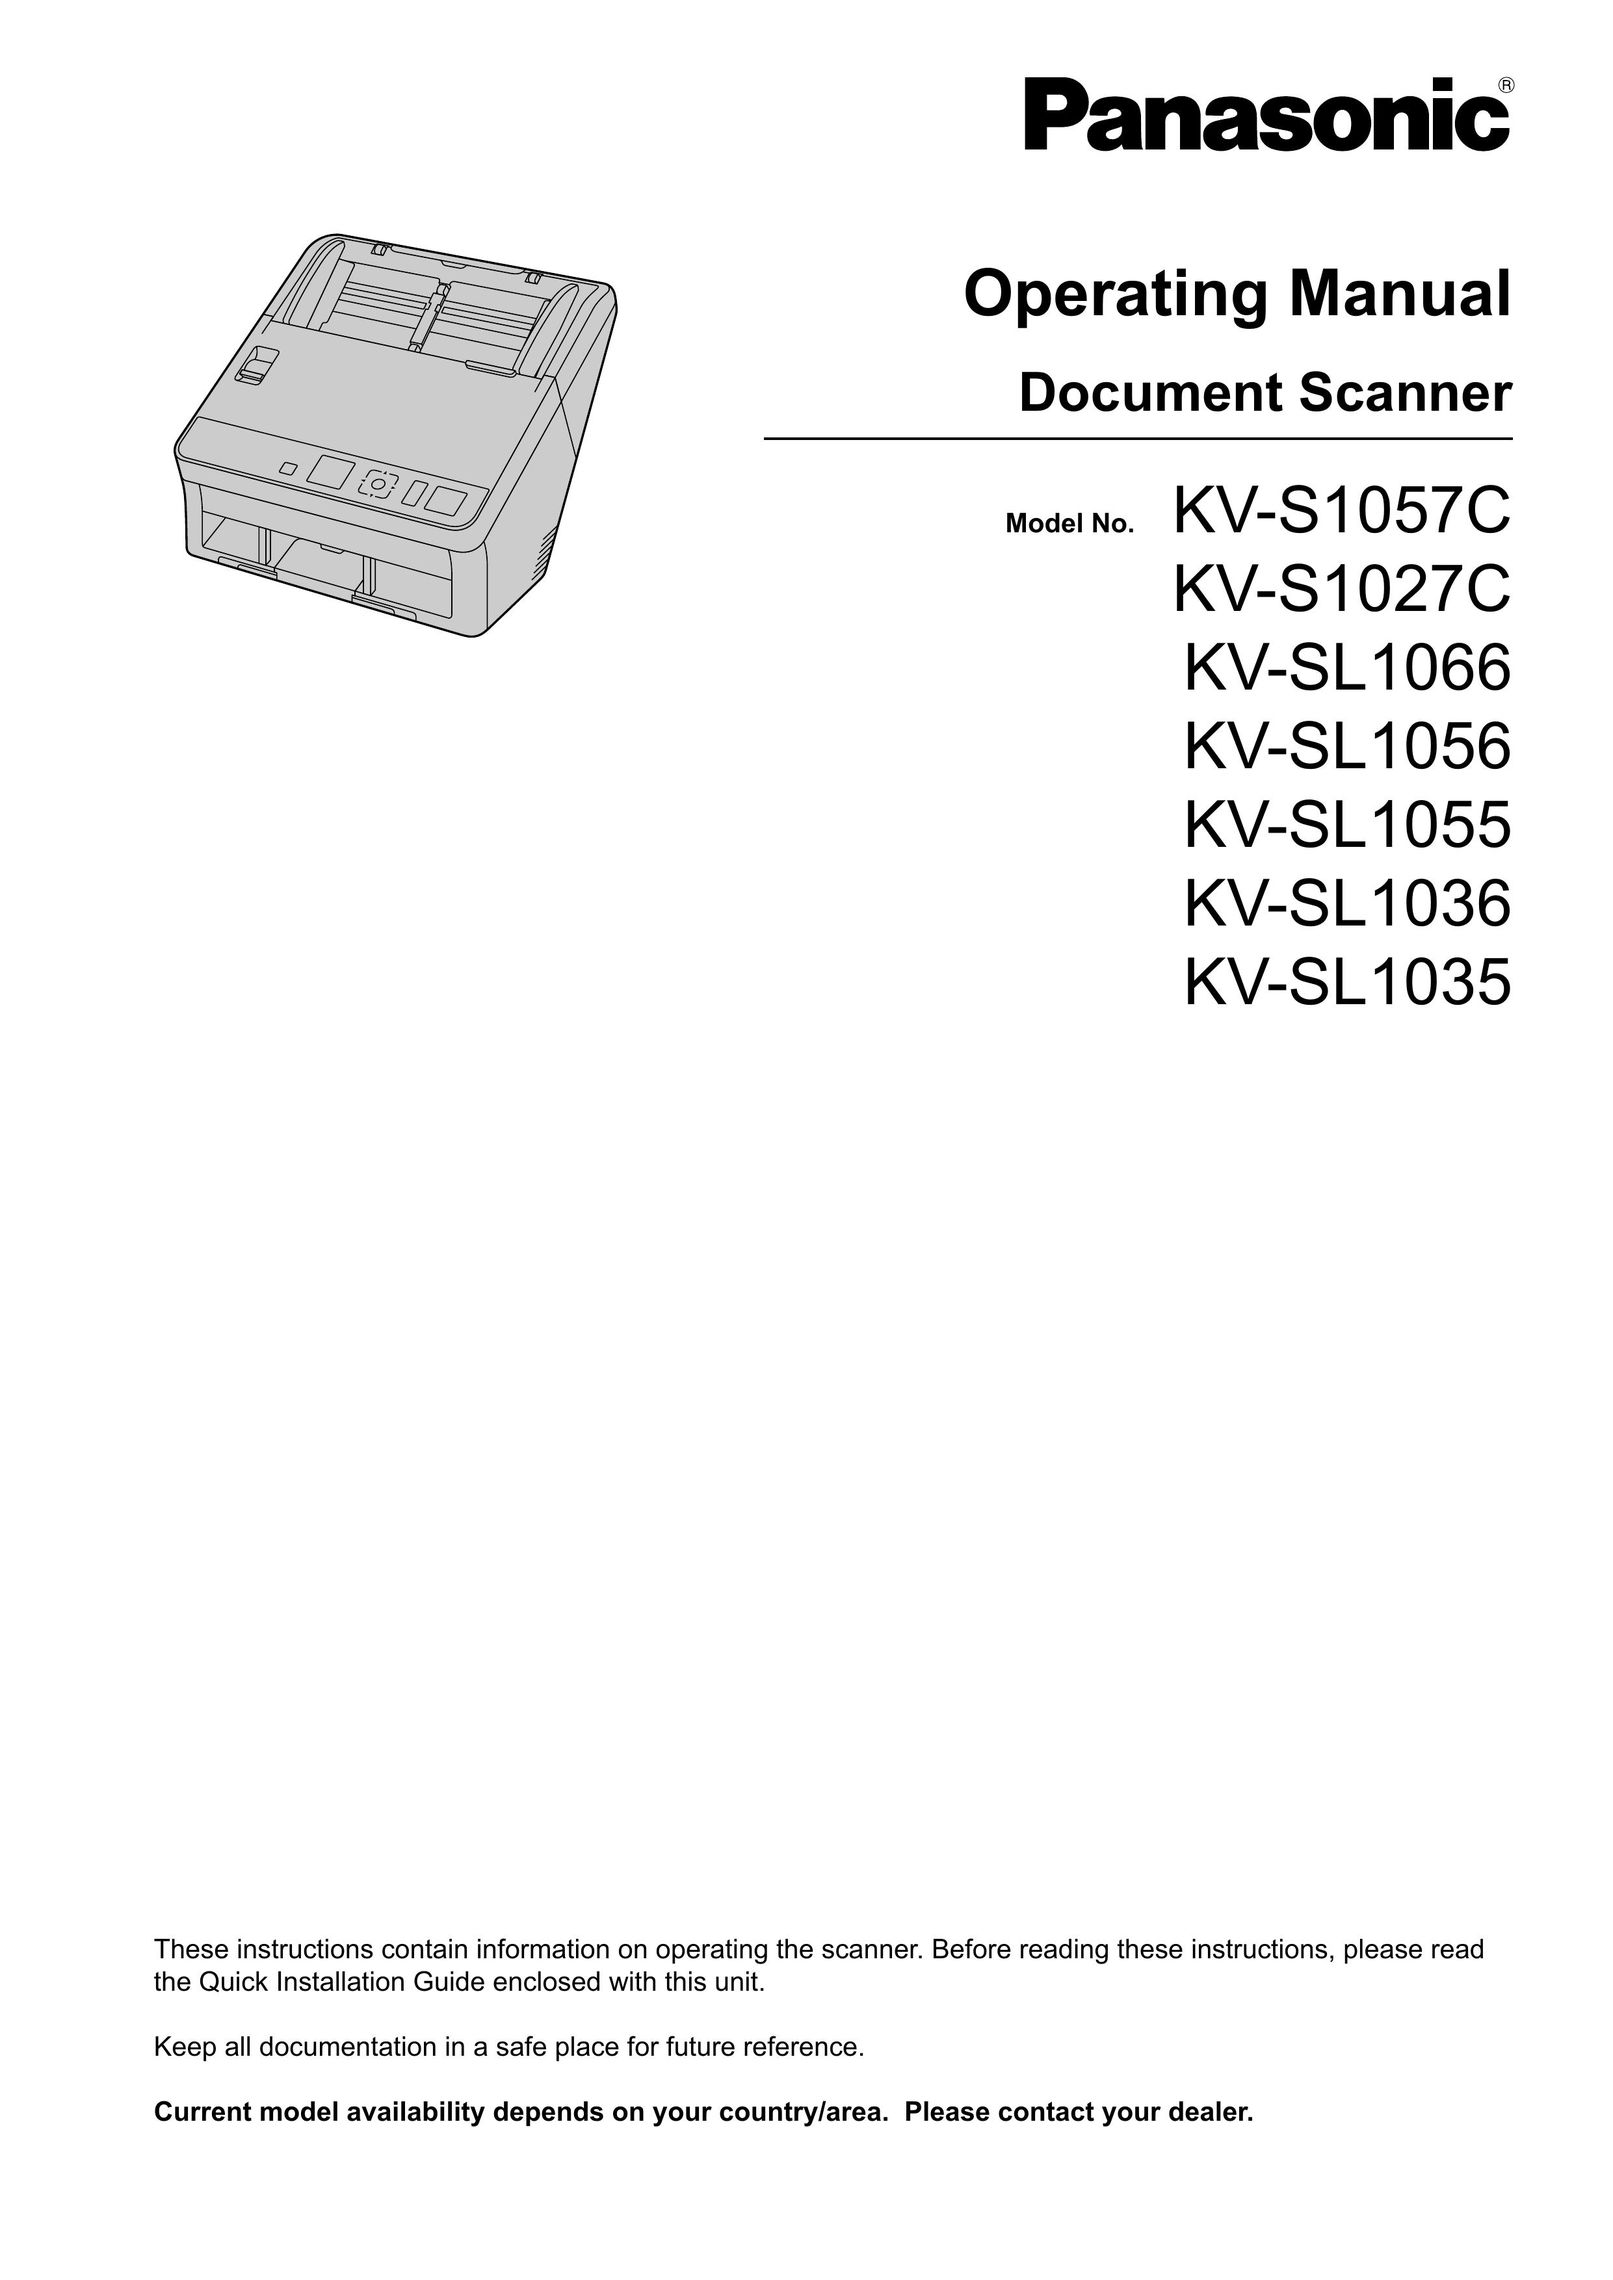 Panasonic KV-S1027C Scanner User Manual